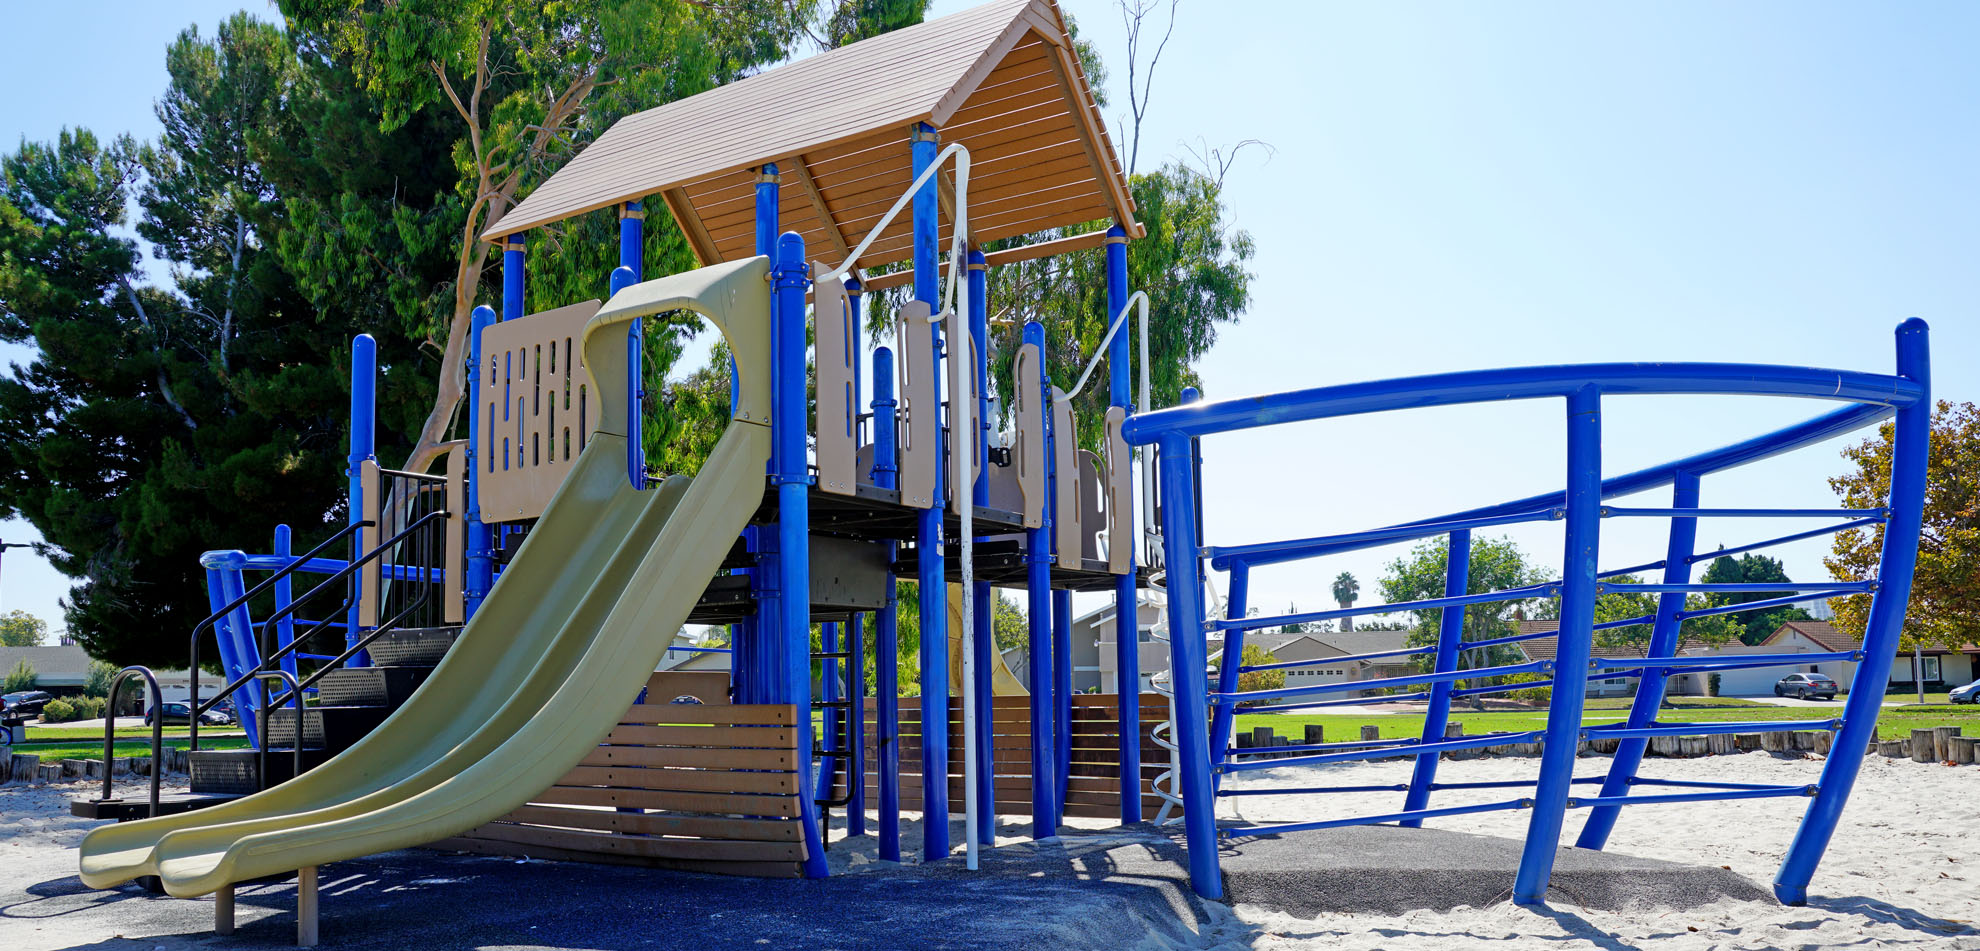 Ark theme playground at Lillie King Park